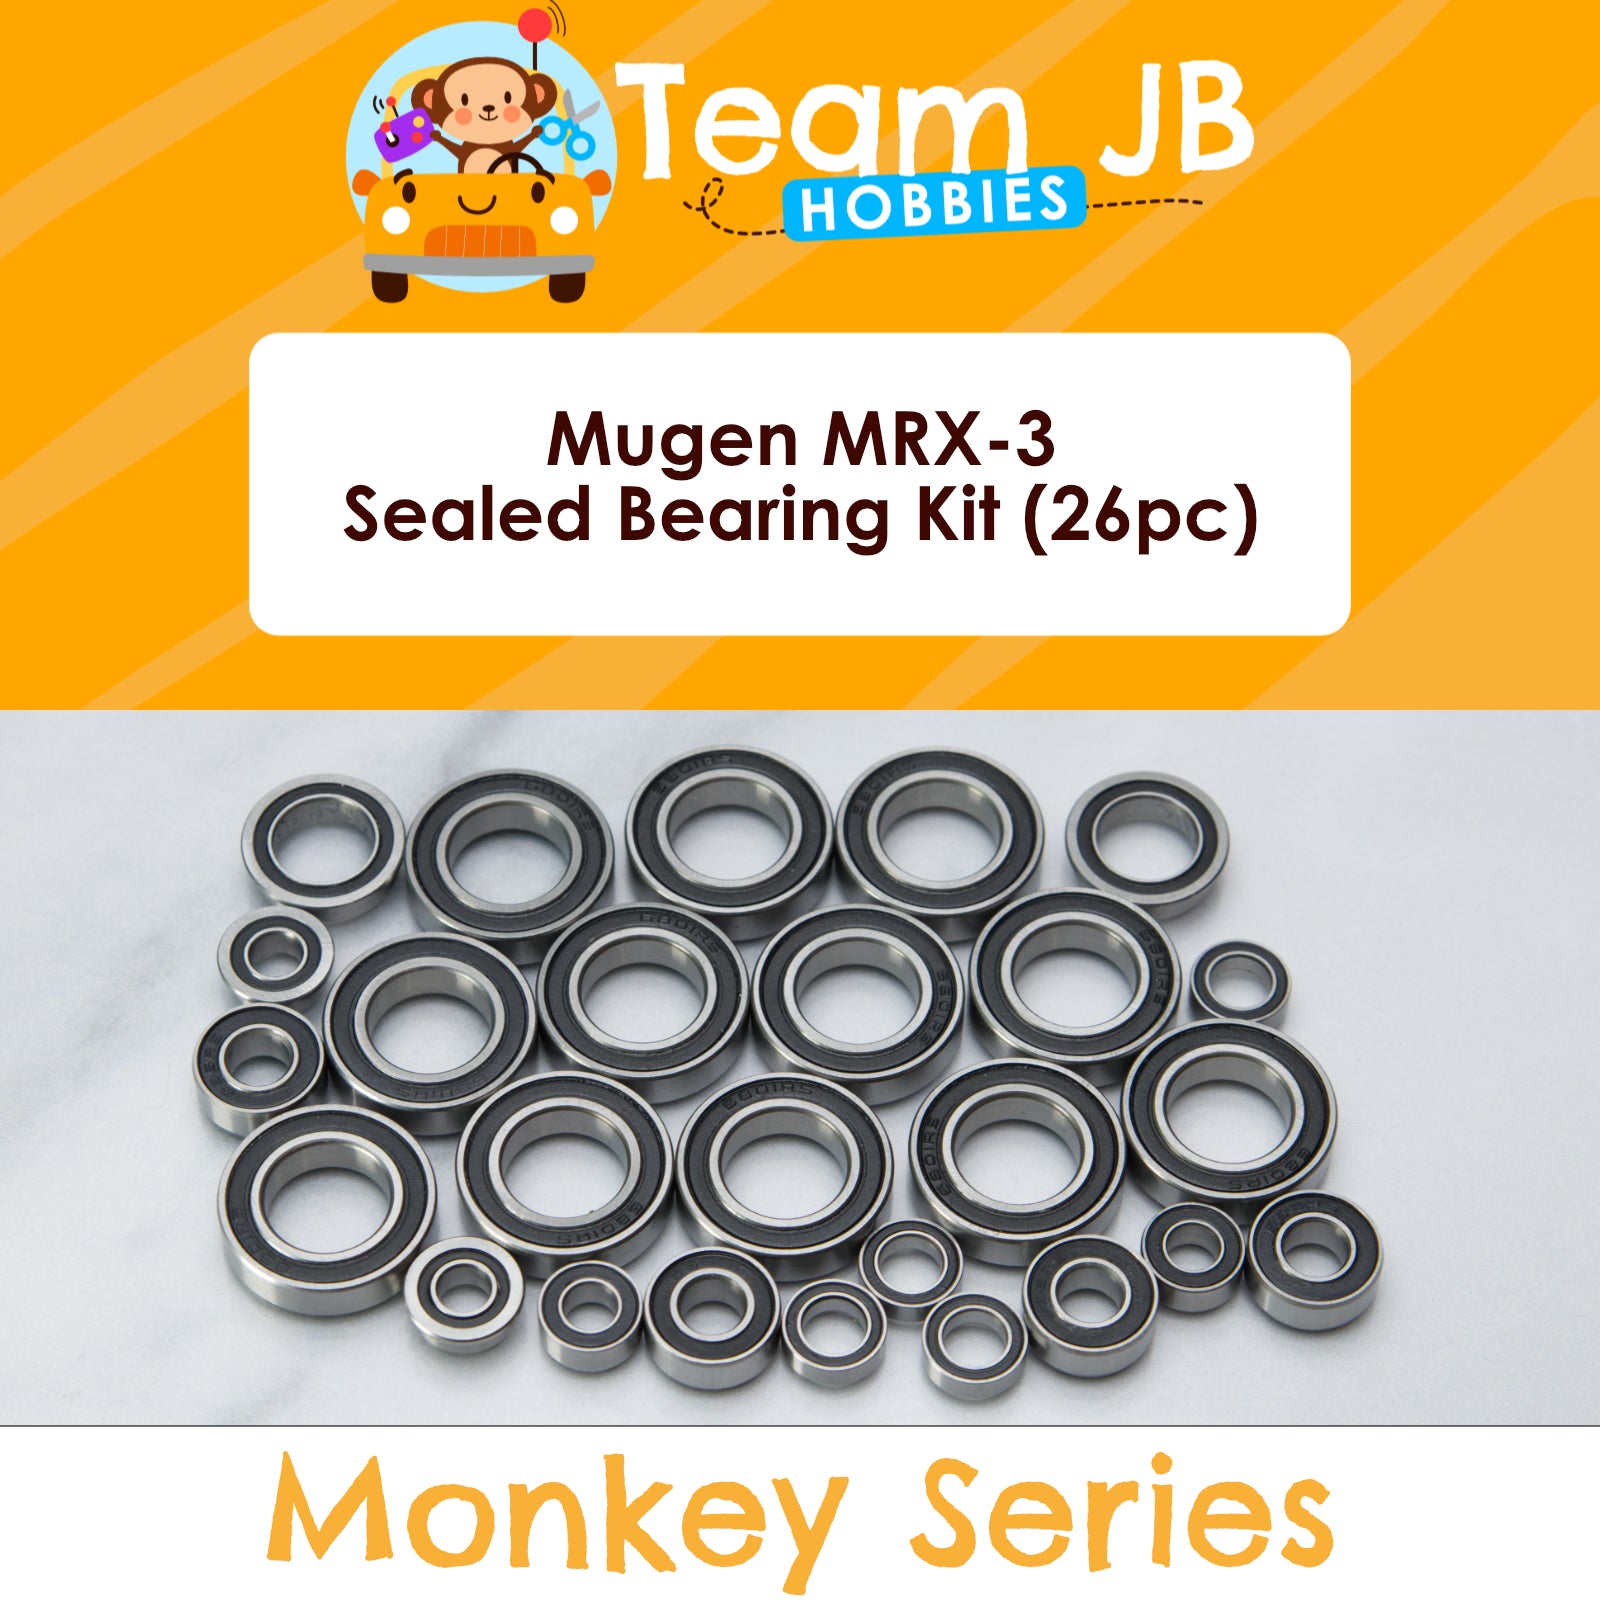 Mugen MRX-3 - Sealed Bearing Kit